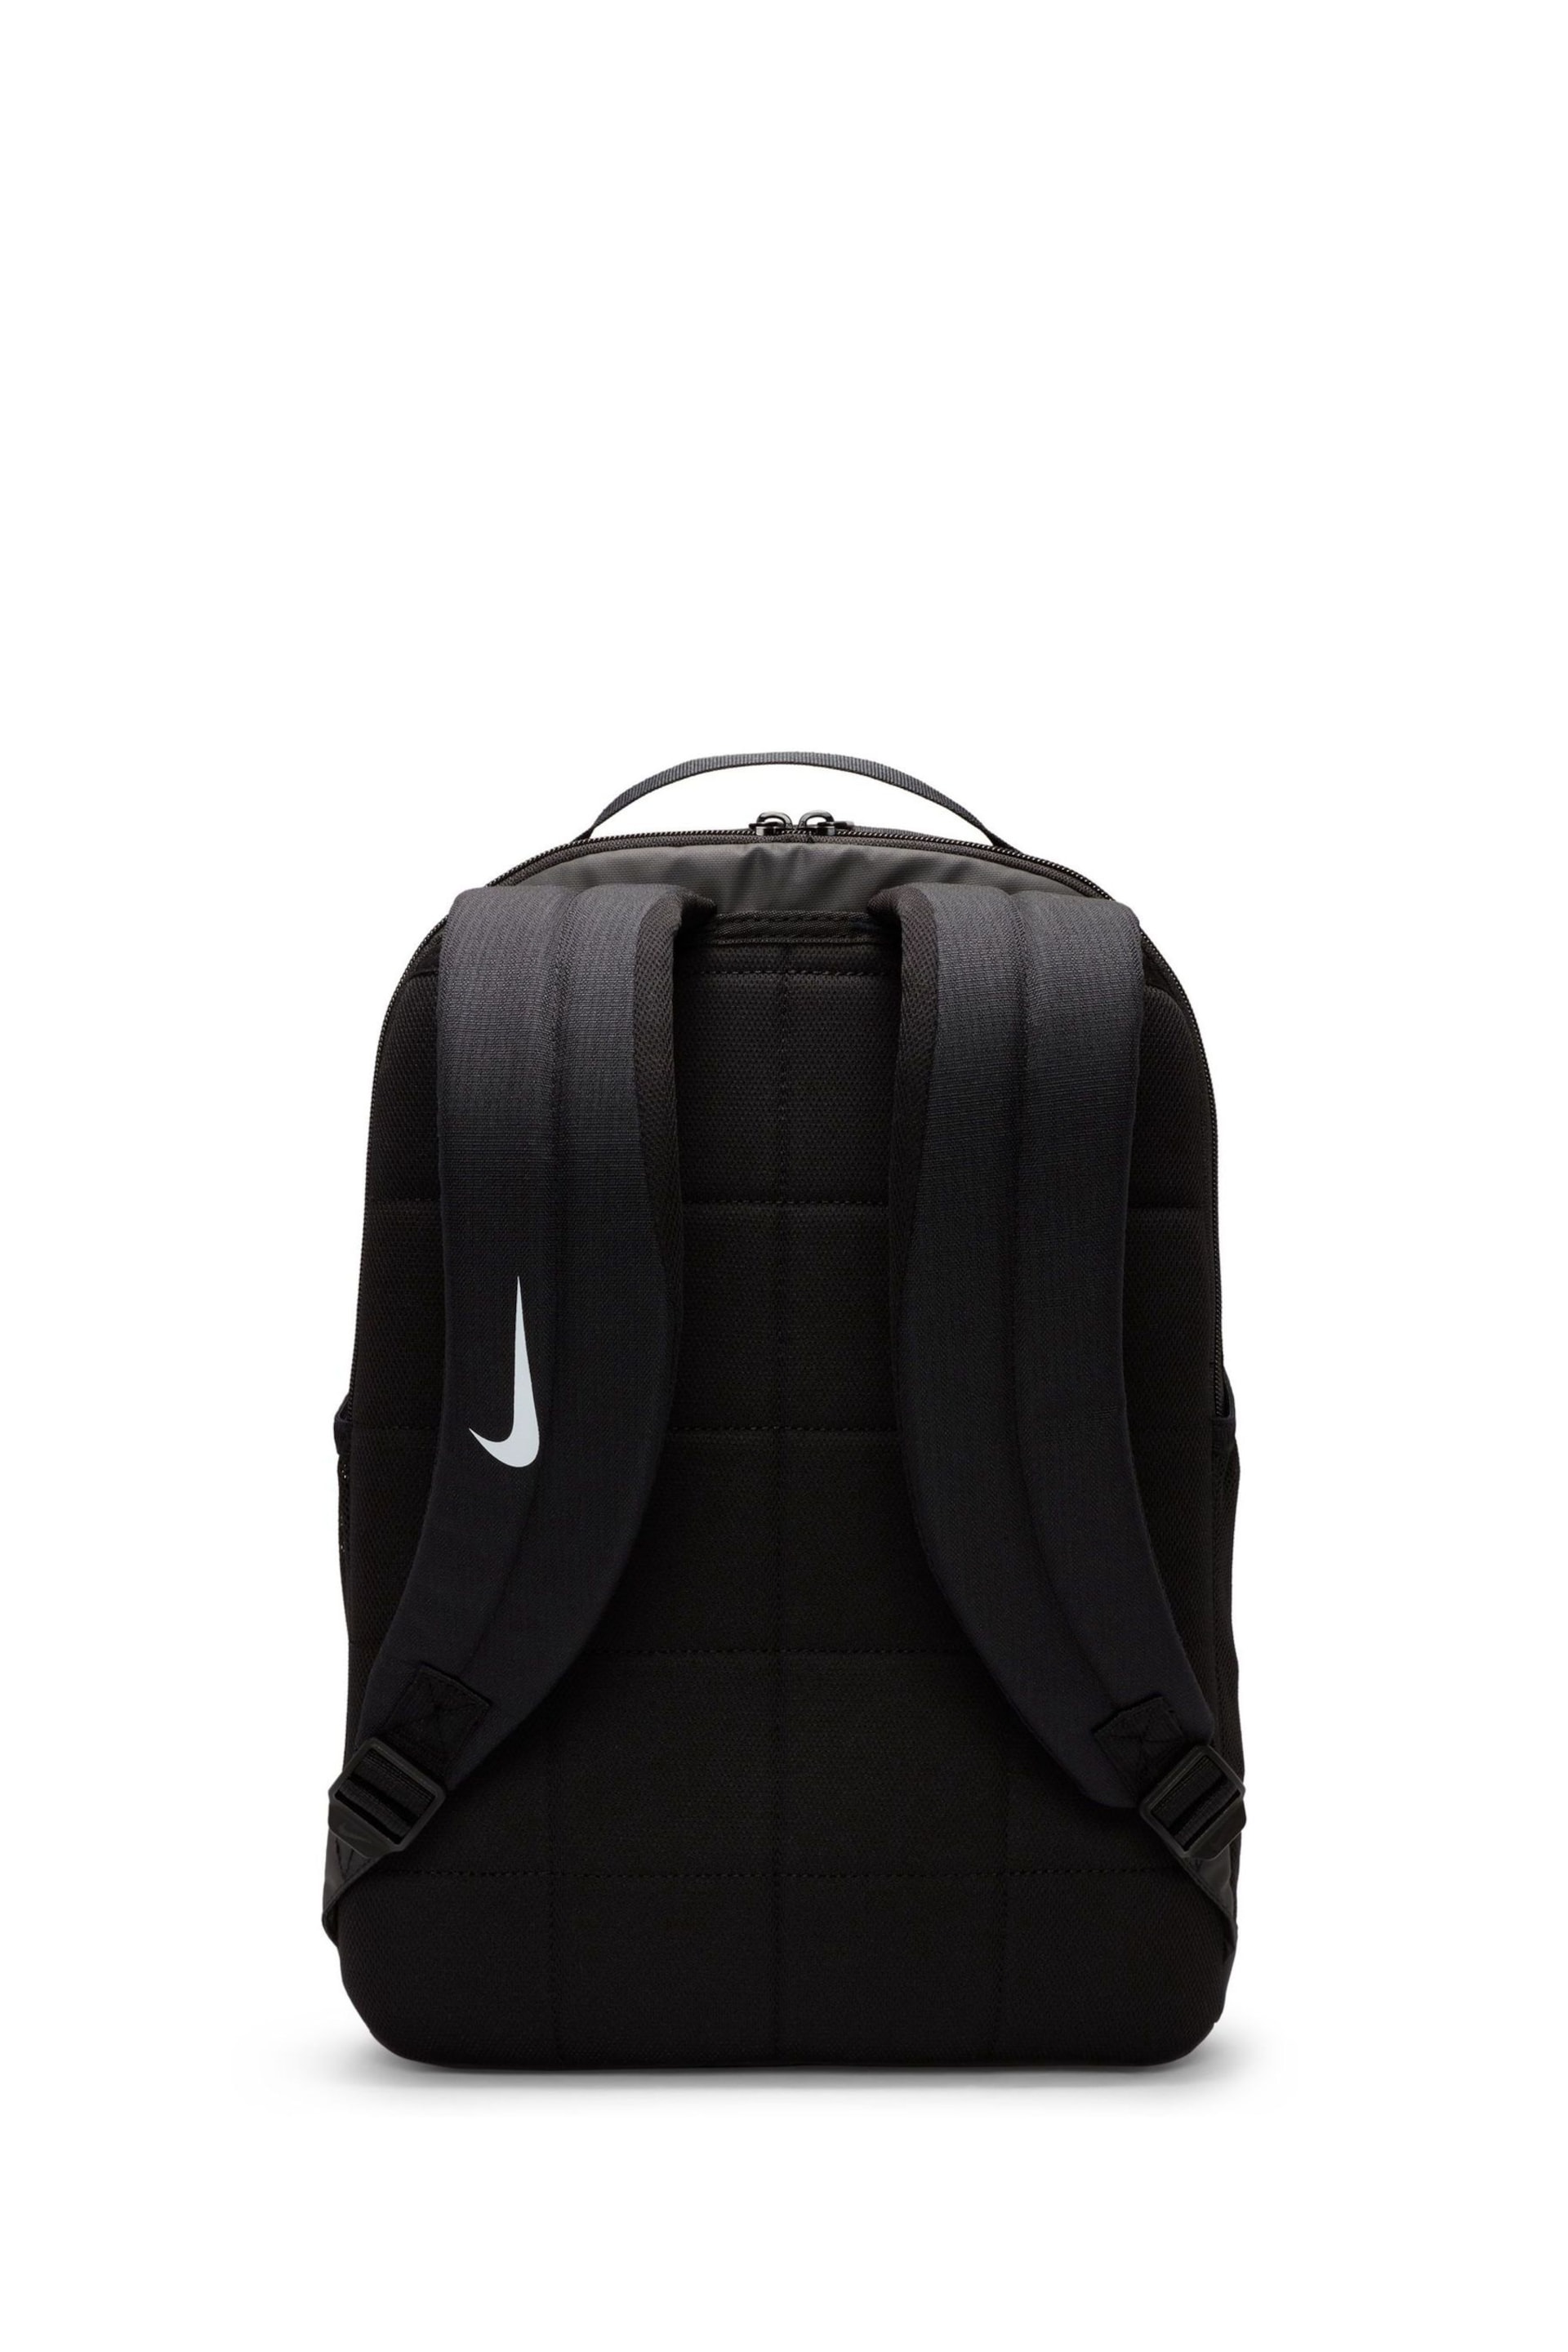 Nike Black/White Brasilia Kids Backpack - Image 5 of 10